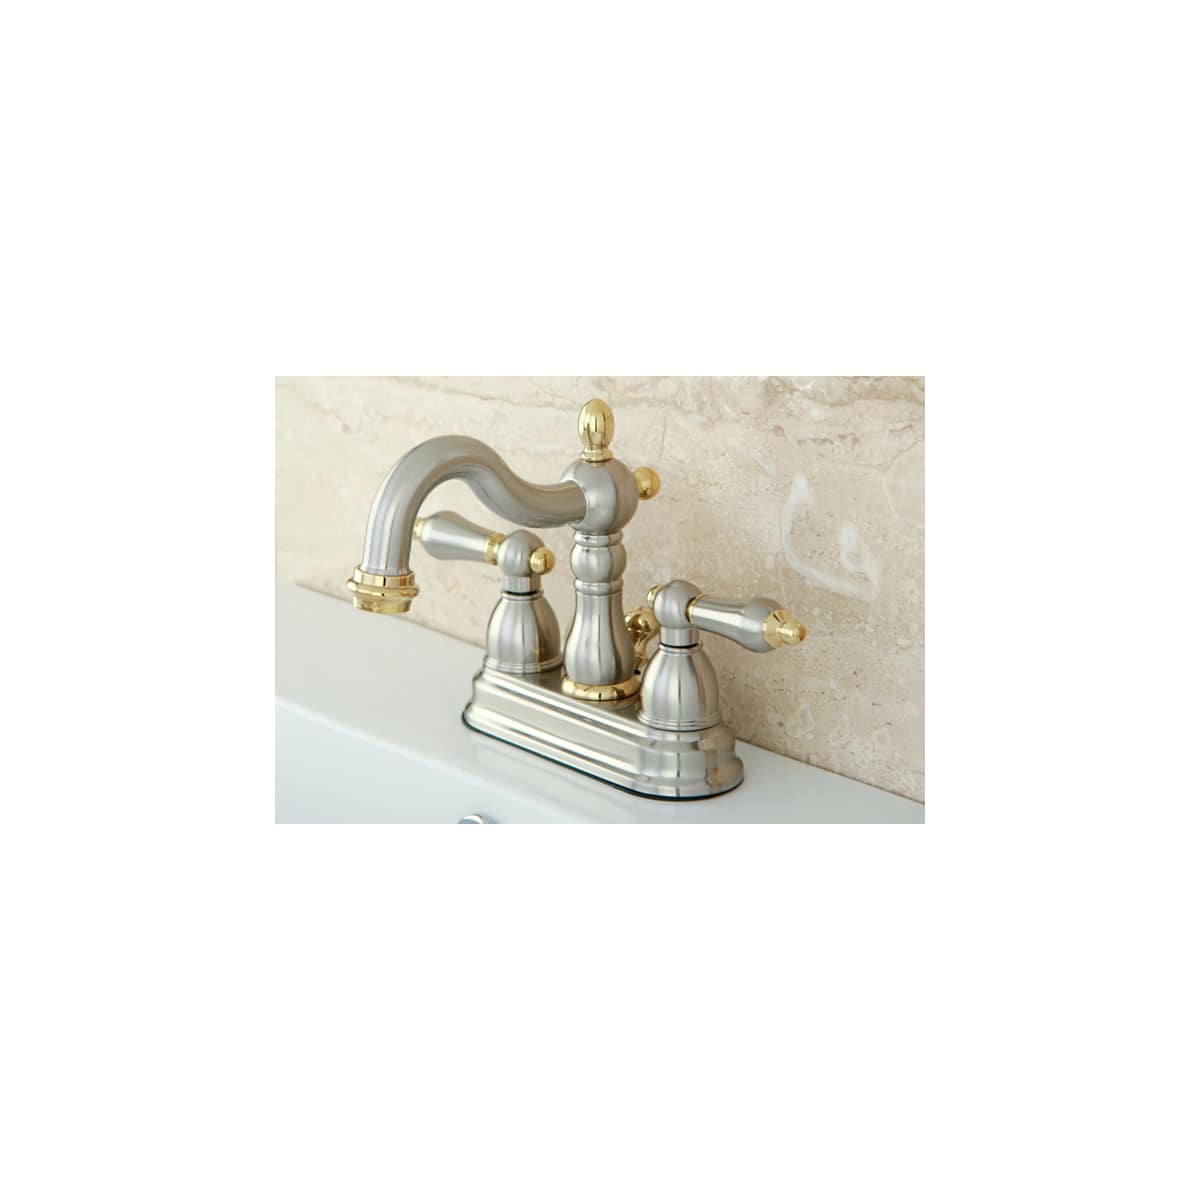 Kingston KB1603AL 4" Centerset Bathroom Sink Faucet Vintage Antique Brass 